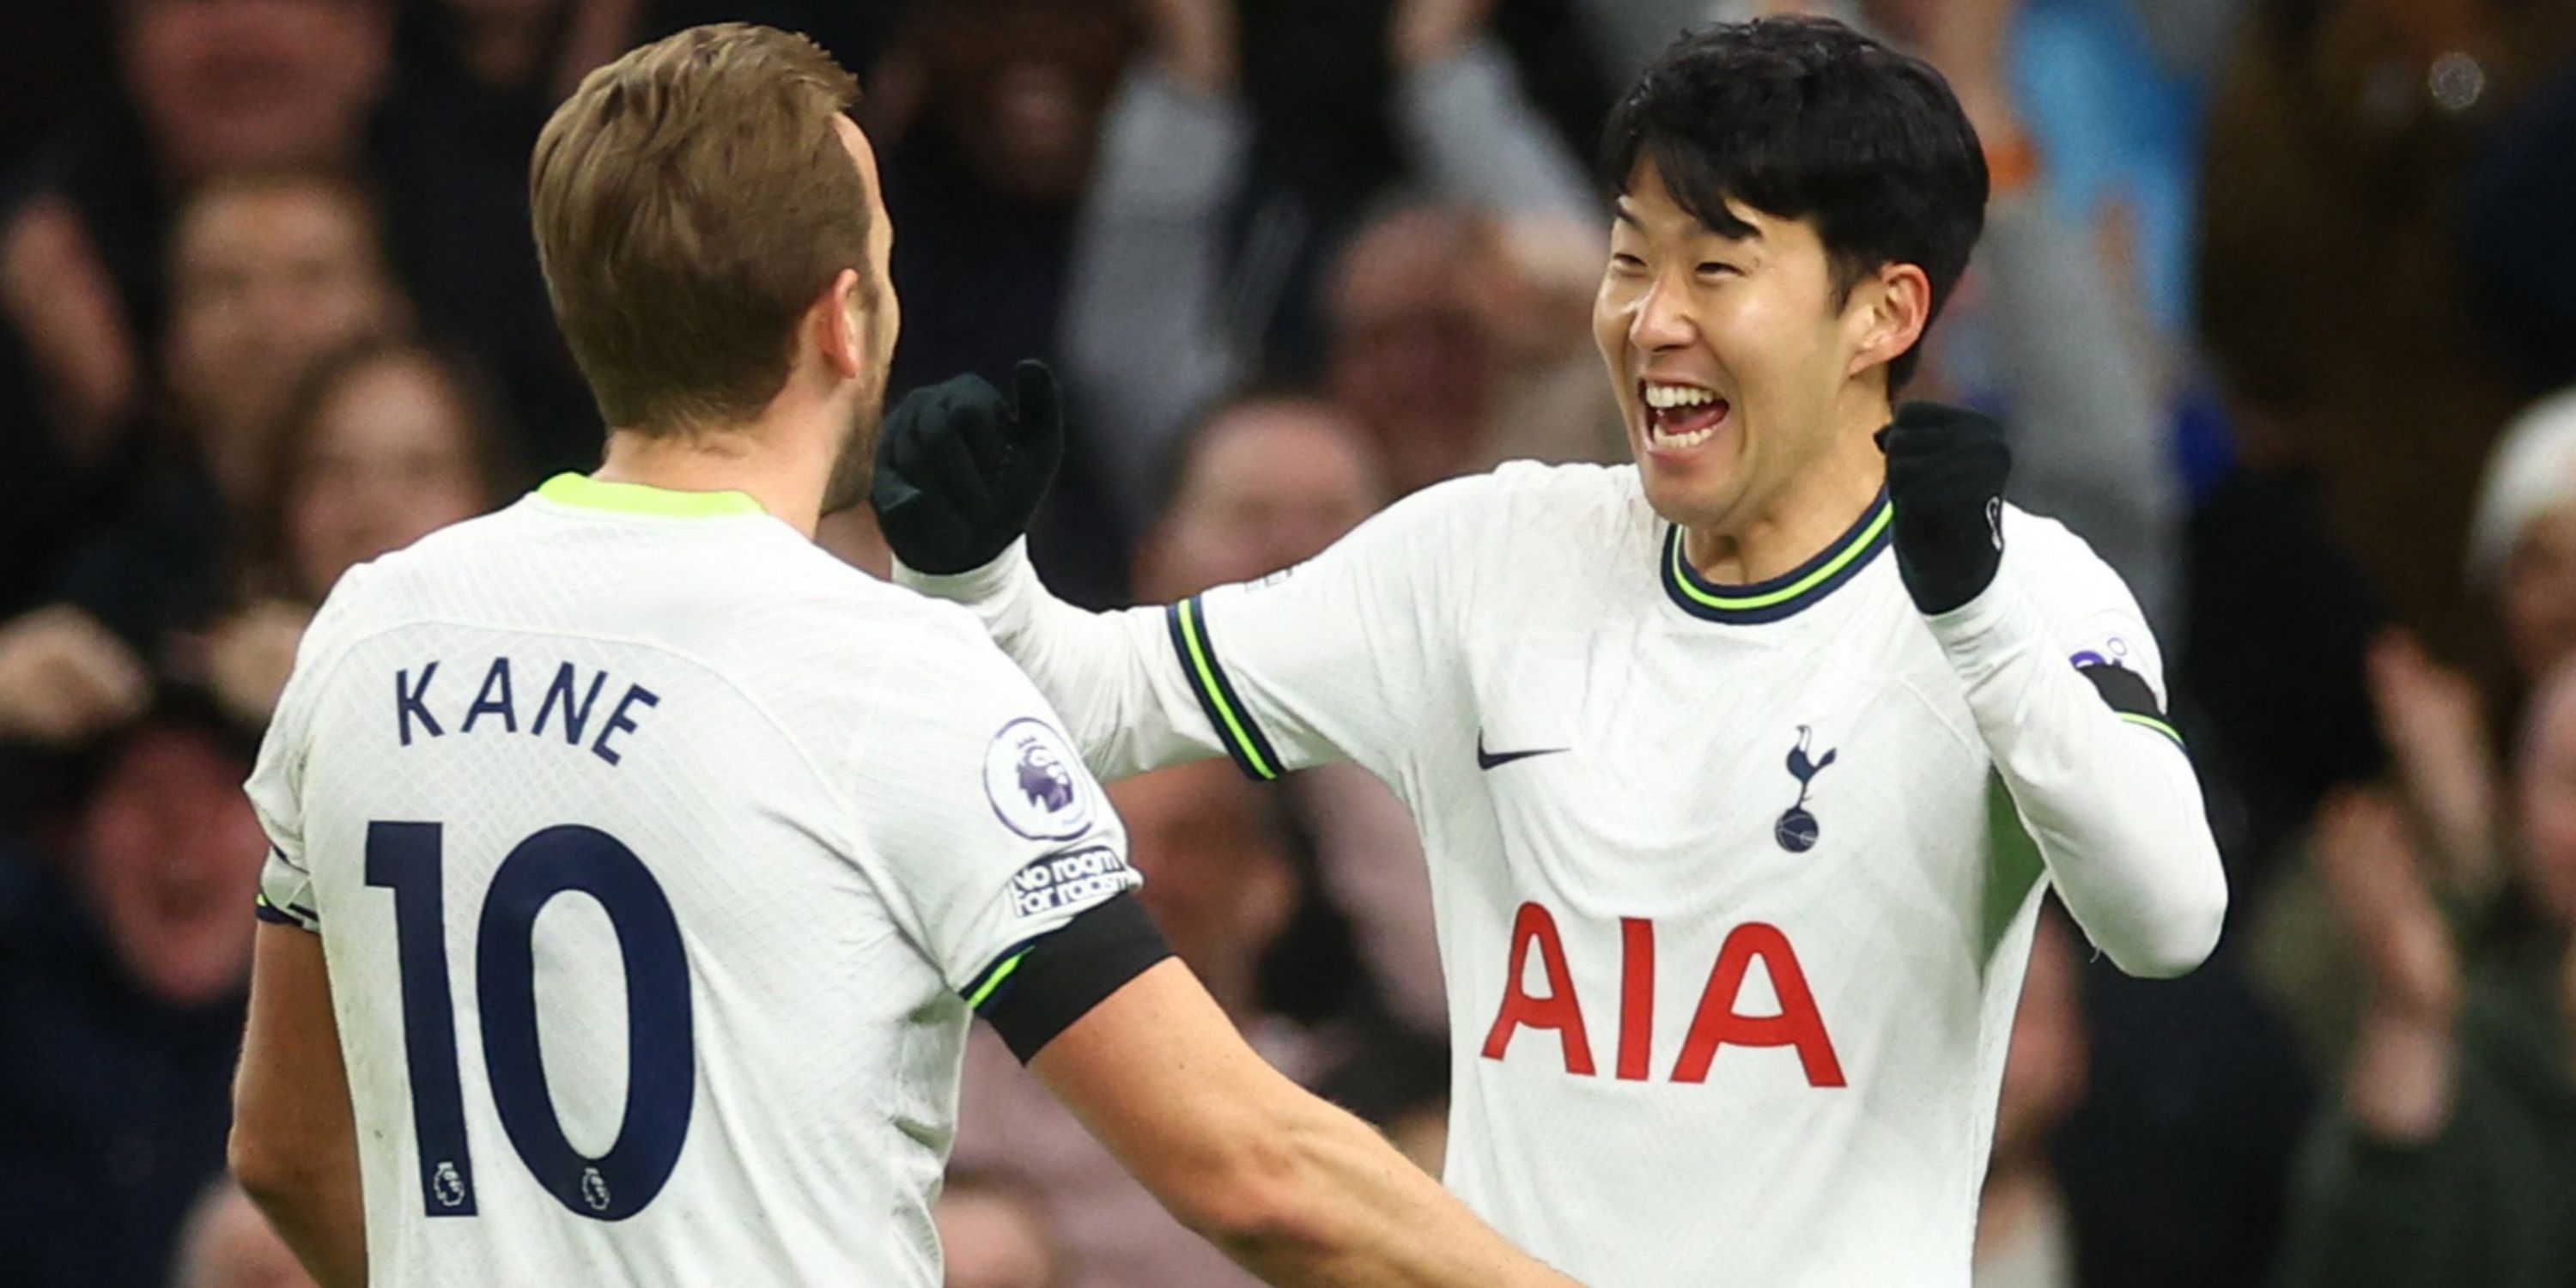 Harry Kane and Heung-min Son celebrate scoring for Tottenham